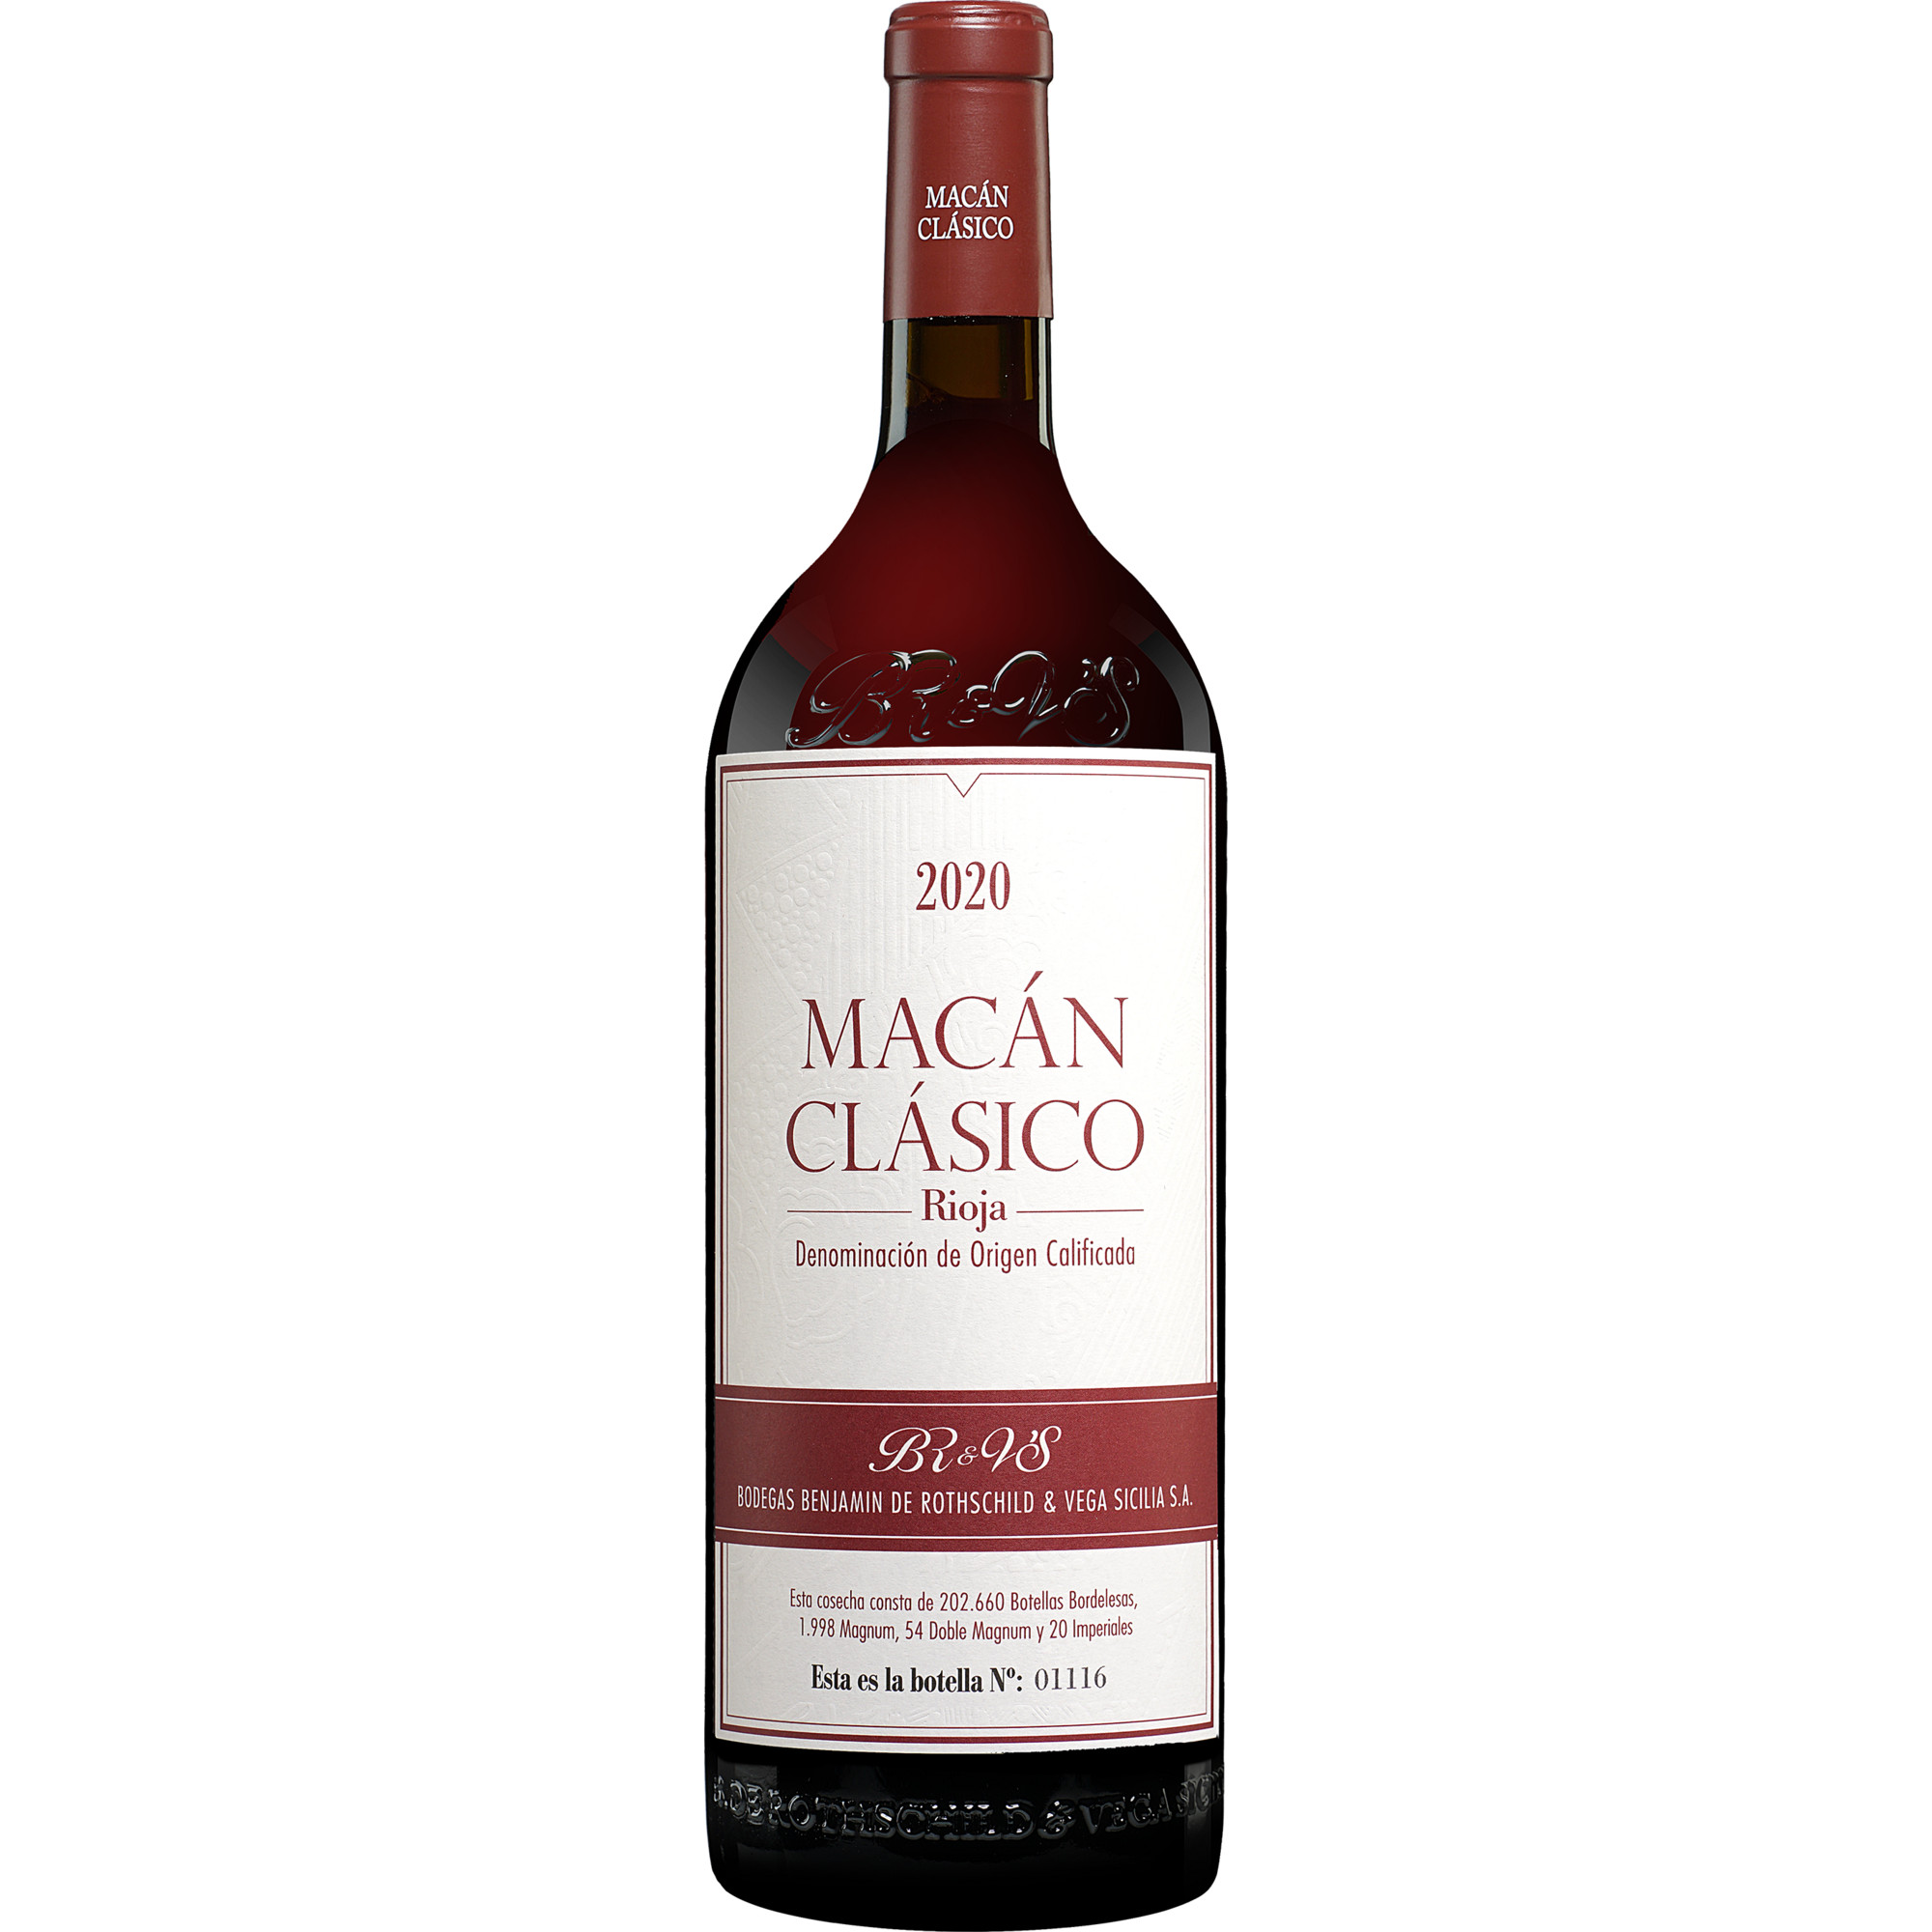 Image of Vega Sicilia »Macán Clásico« - 1,5 L. Magnum 2020 1.5L 14% Vol. Rotwein Trocken aus Spanien